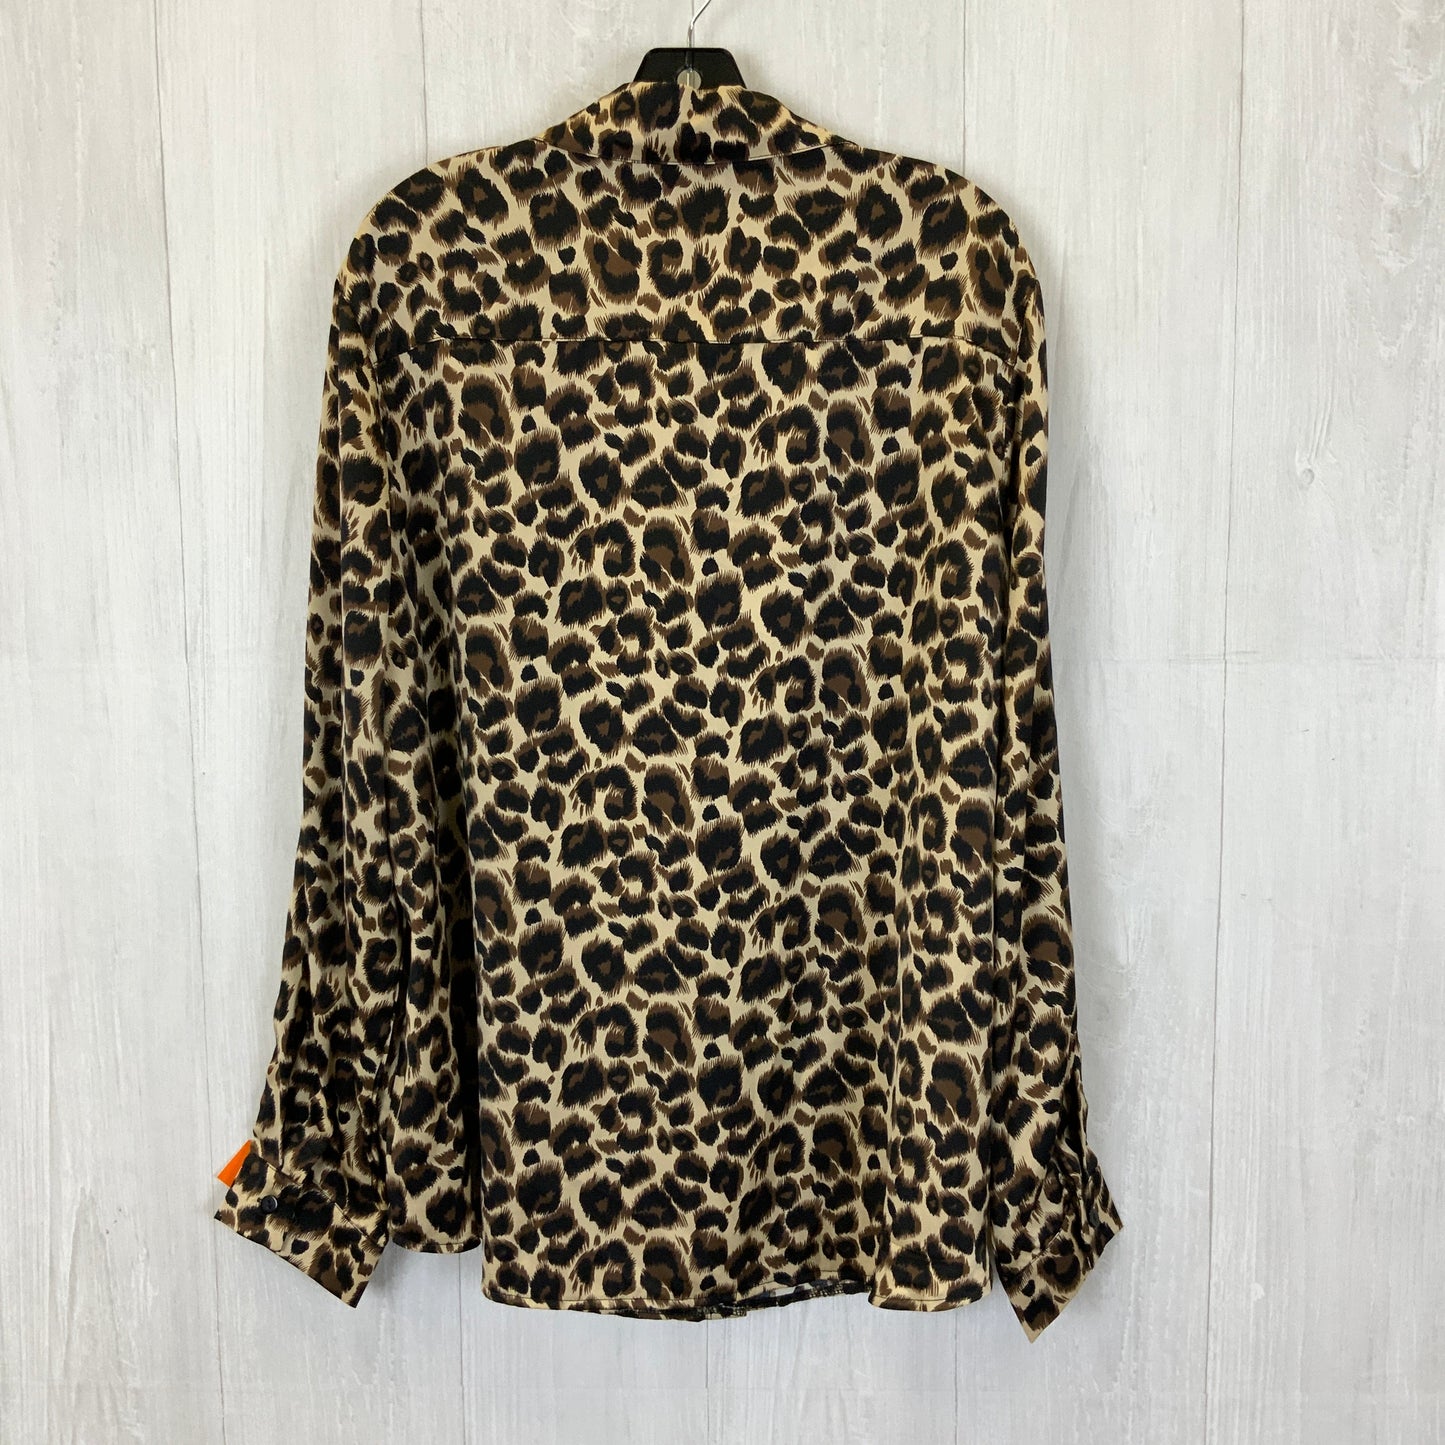 Leopard Print Blouse Long Sleeve Clothes Mentor, Size 2x